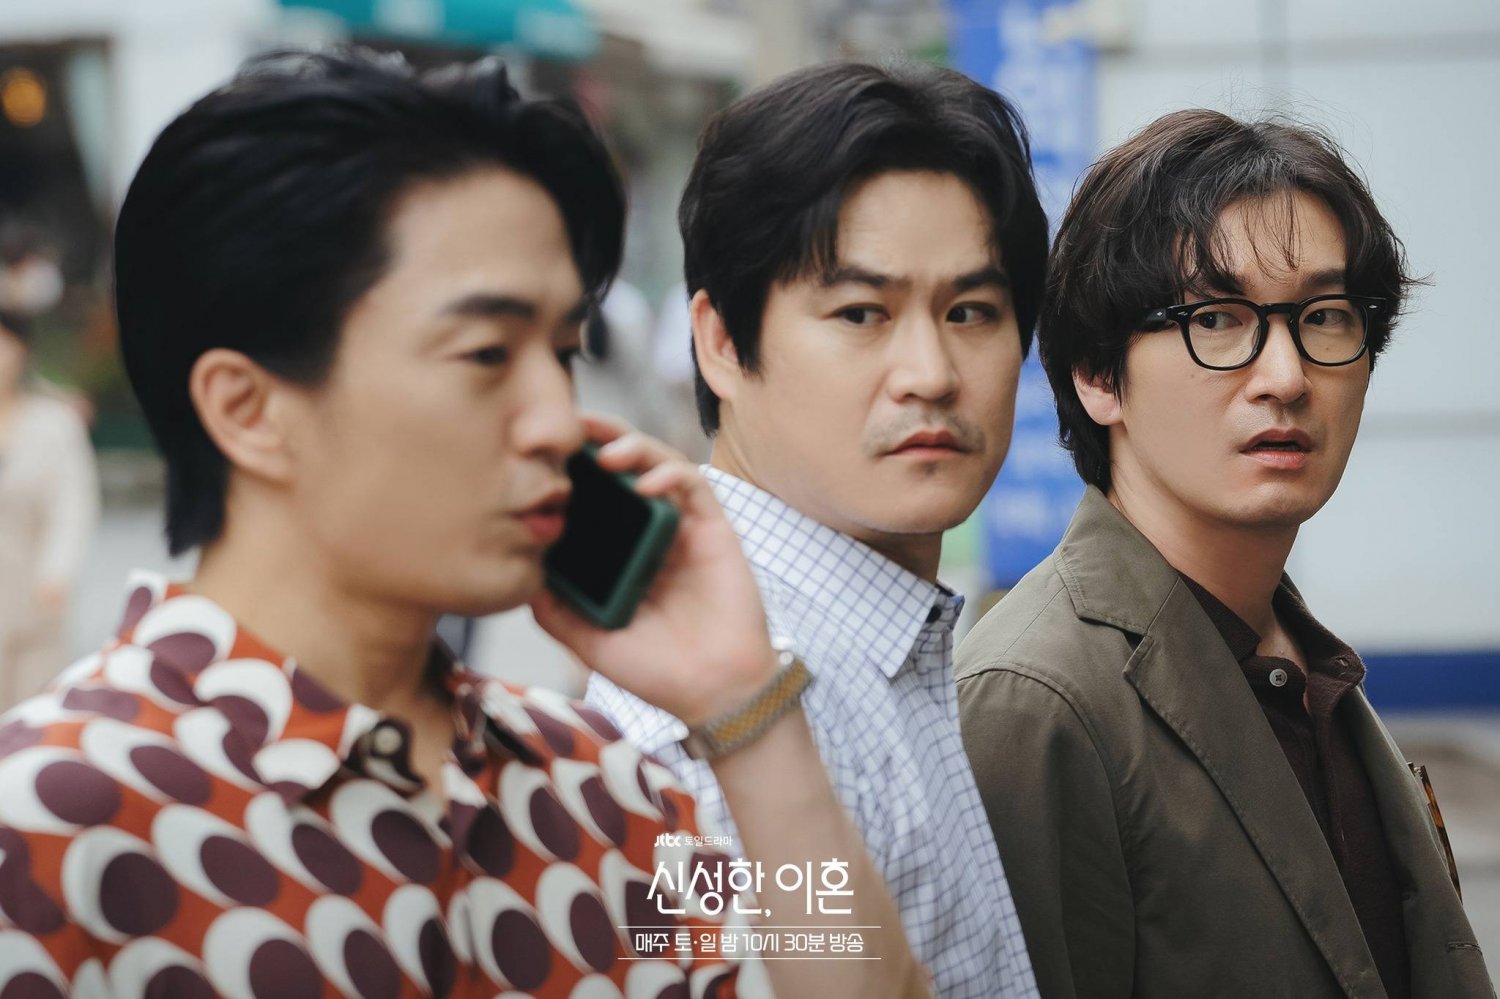 [Photos] New Stills Added for the Korean Drama 'Divorce Attorney Shin